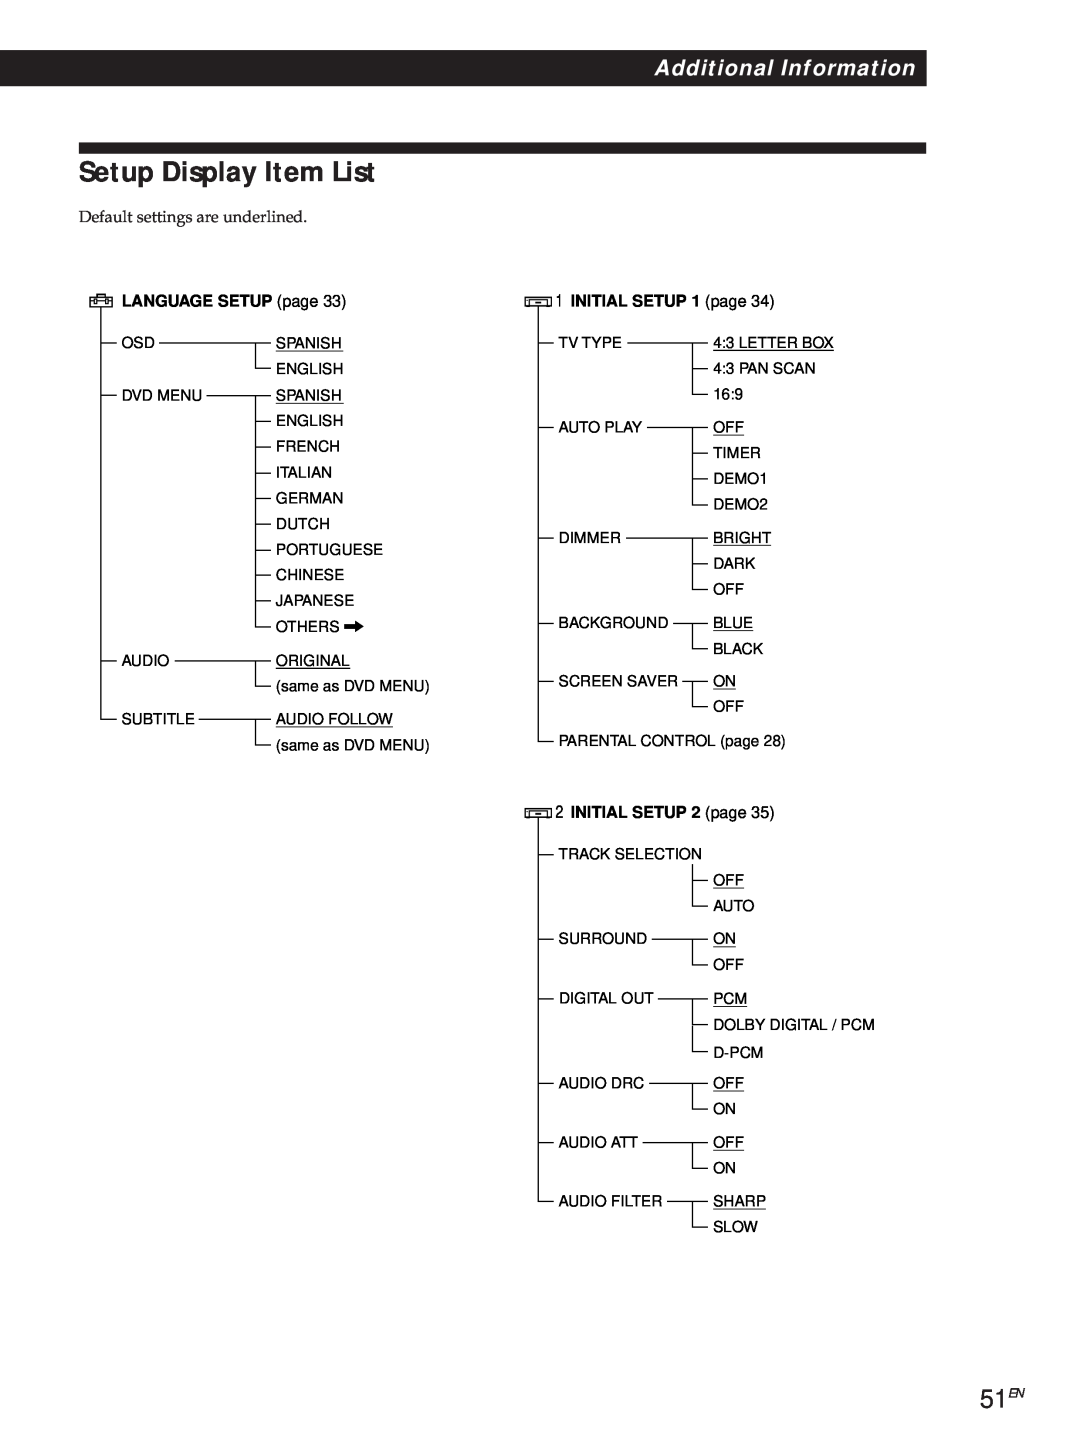 Sony DVP-S500D manual Setup Display Item List, 51EN, Additional Information, LANGUAGE SETUP page, INITIAL SETUP 1 page 